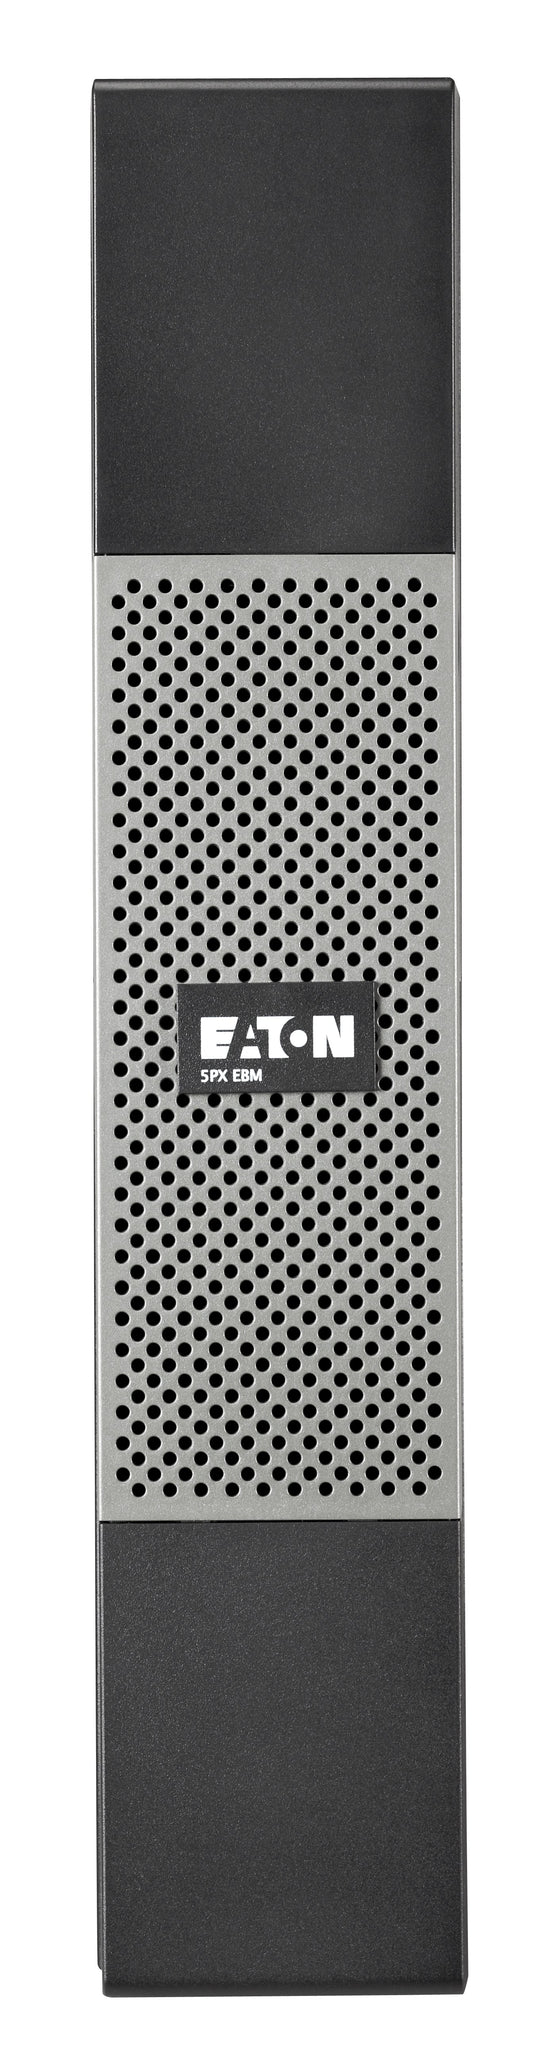 Eaton 5Px Ebm 48V Rt2U Sealed Lead Acid (Vrla)